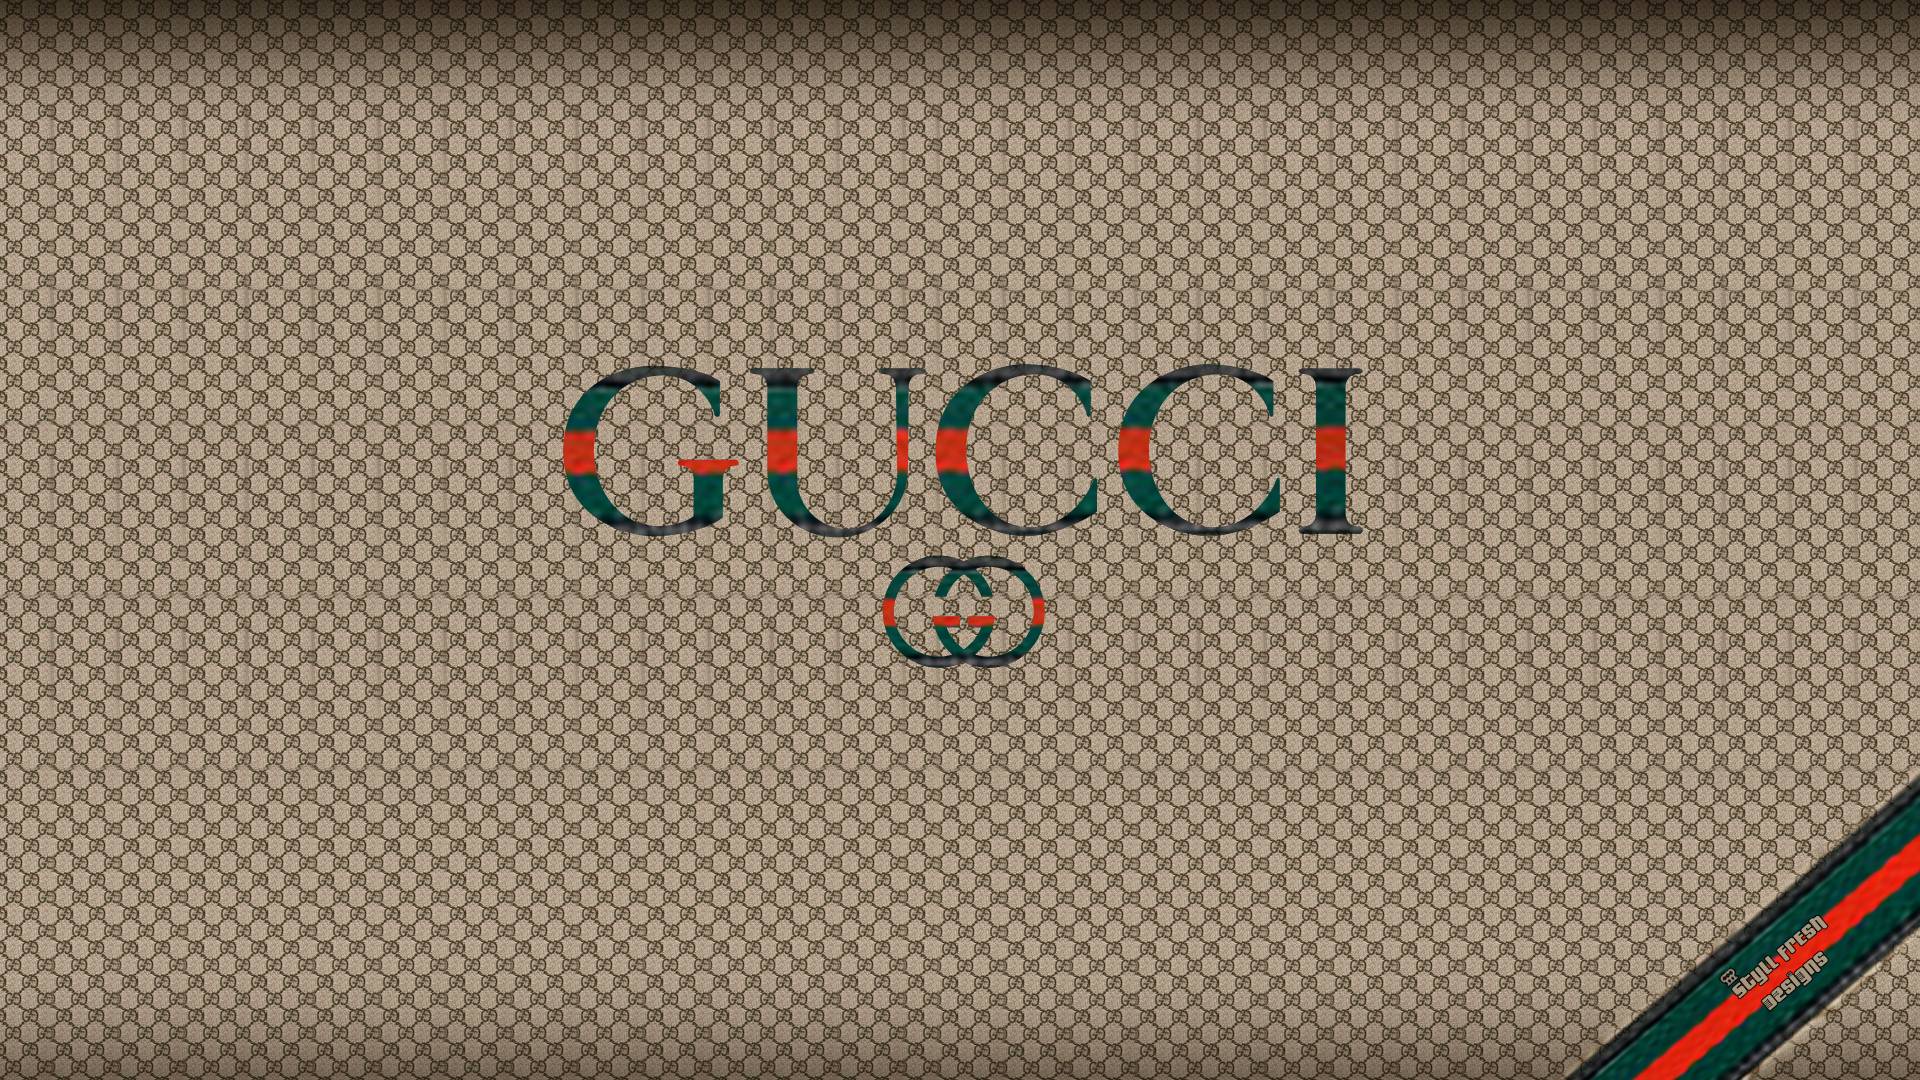 Gucci Wallpaper Cliparts, Stock Vector and Royalty Free Gucci Wallpaper  Illustrations